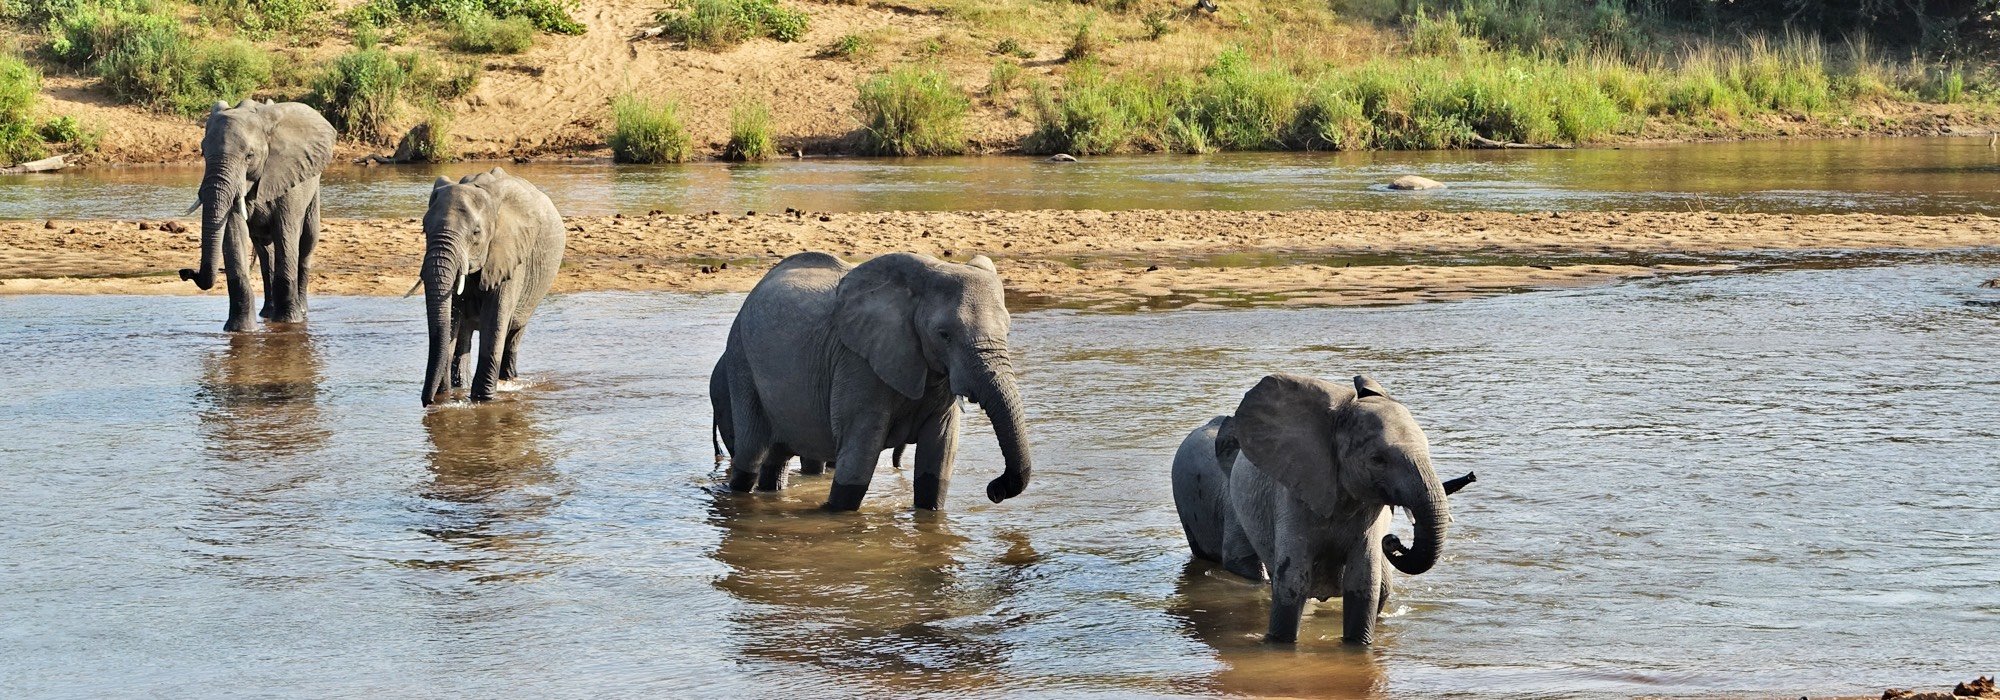 Elephants crossing a River